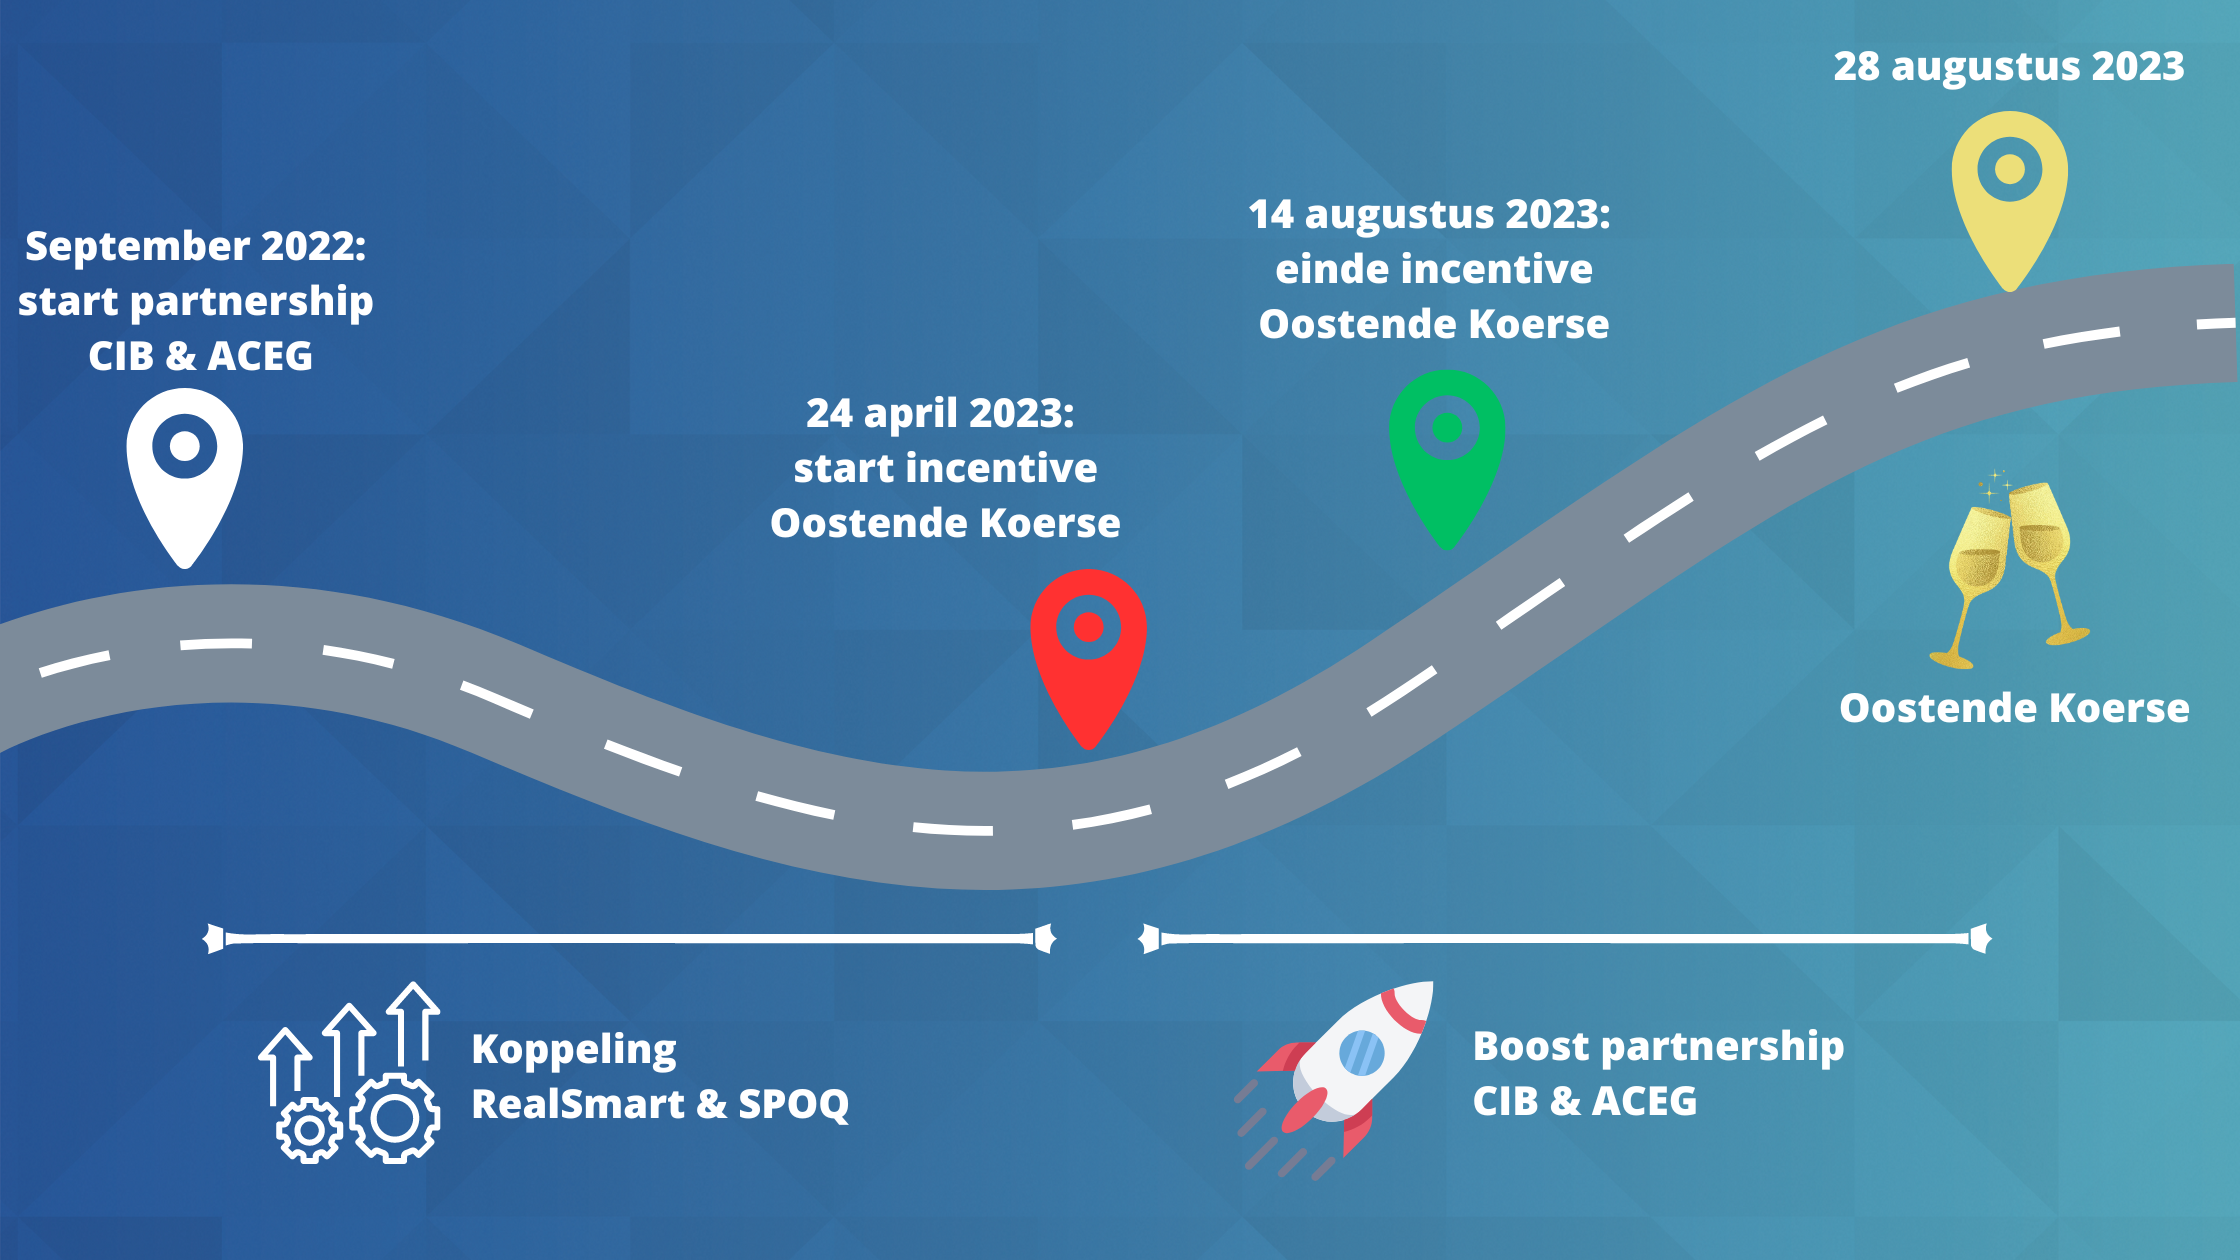 September 2022 start partnership CIB & ACEG